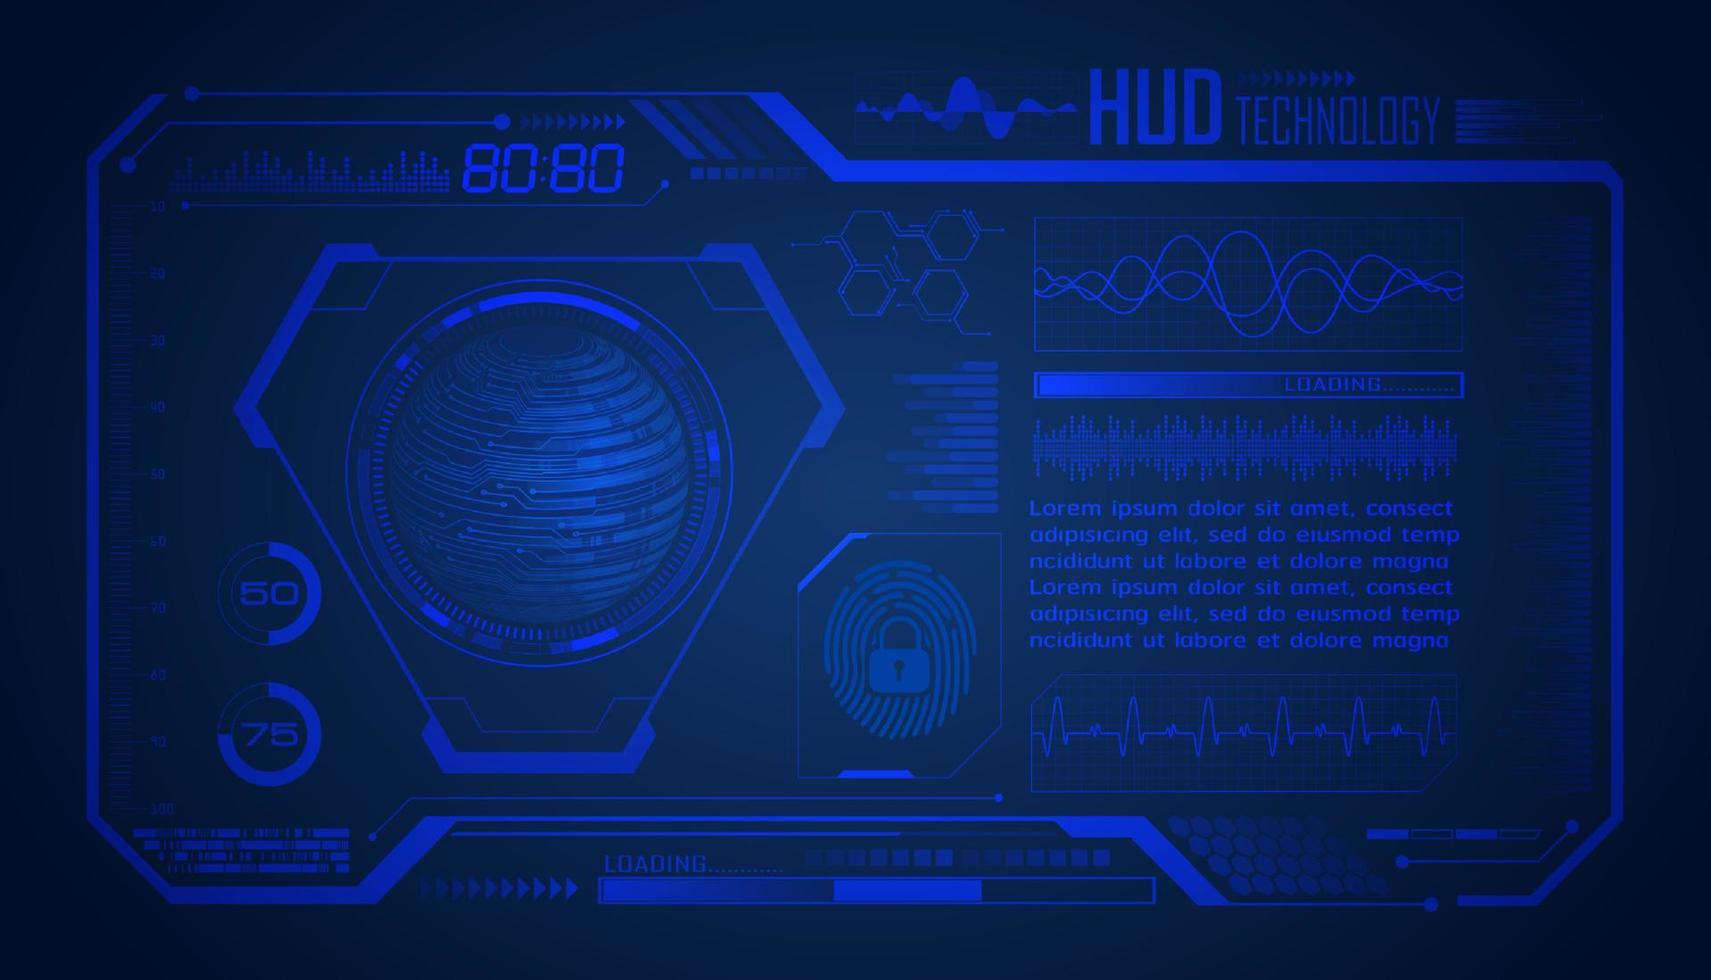 Modern HUD Technology Screen Background vector